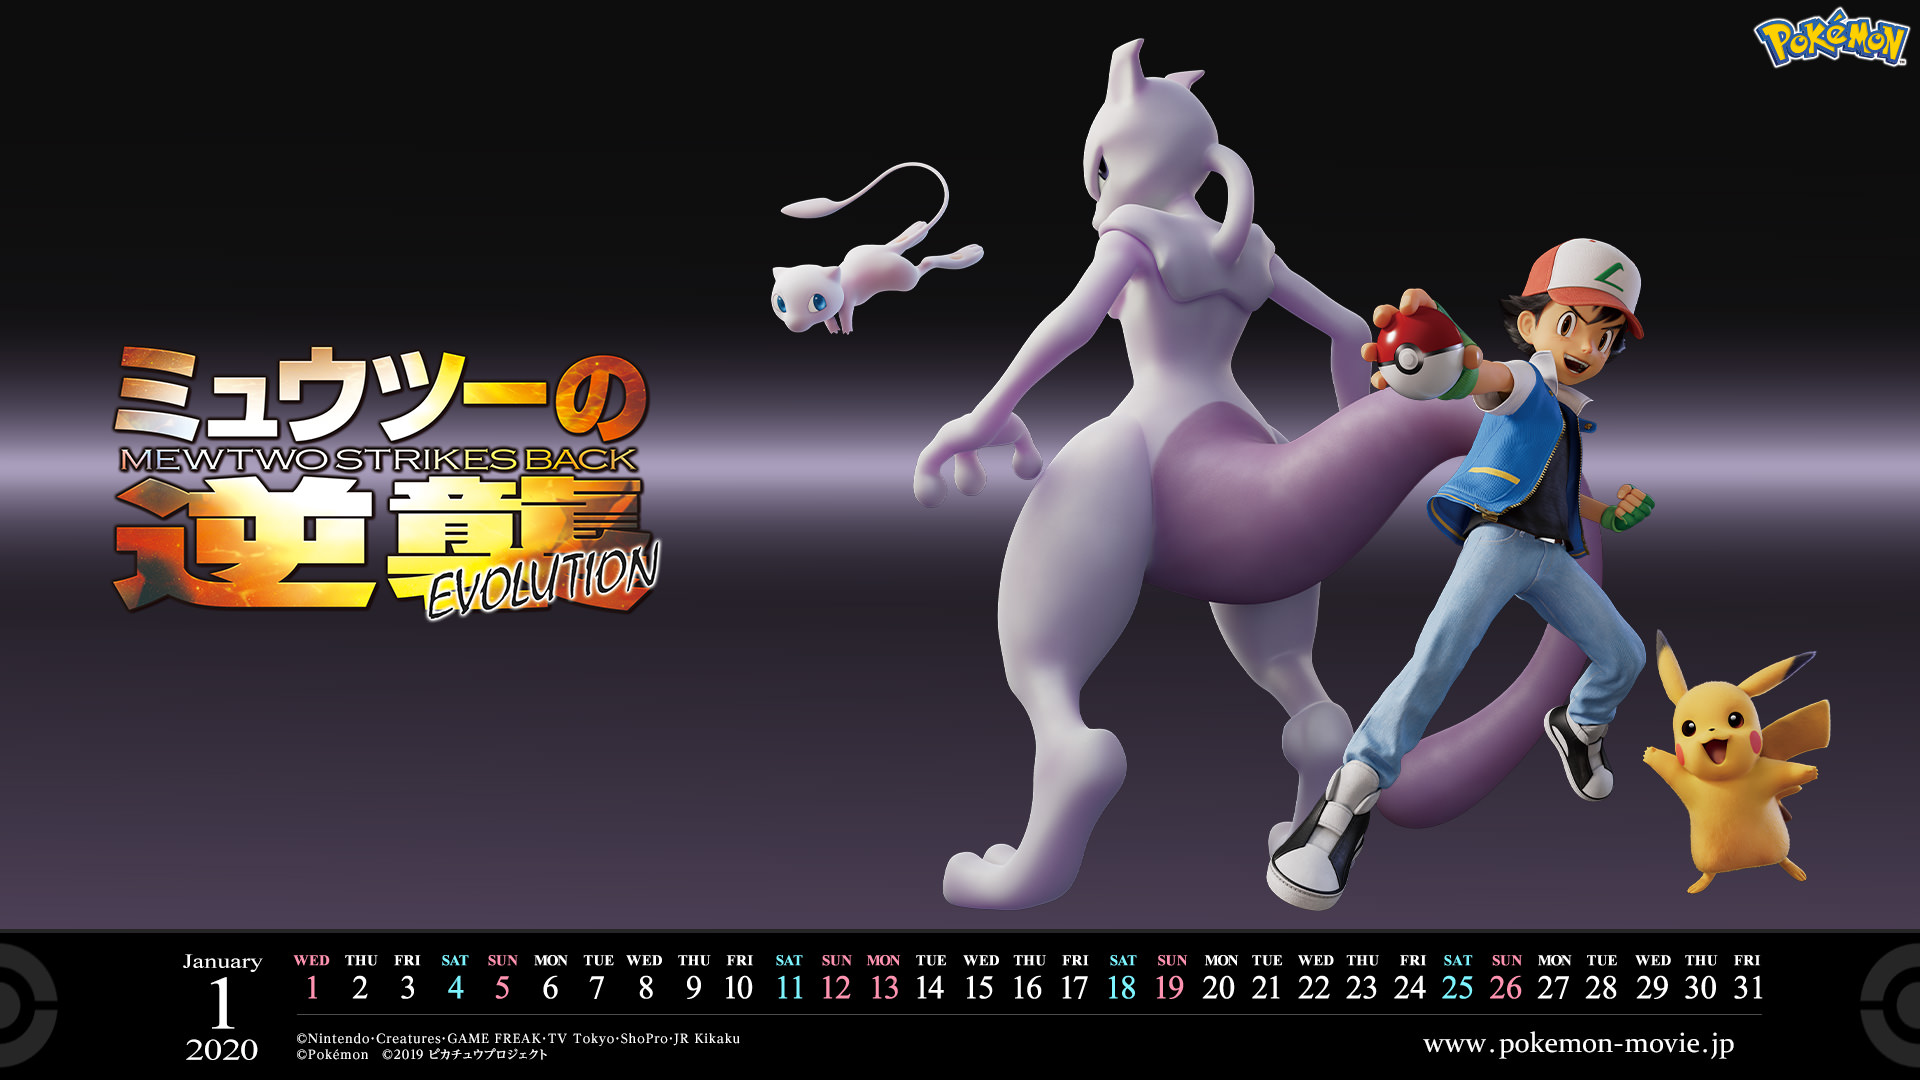 New Pokemon The Movie Mewtwo Strikes Back Evolution Wallpaper Released Gonintendo